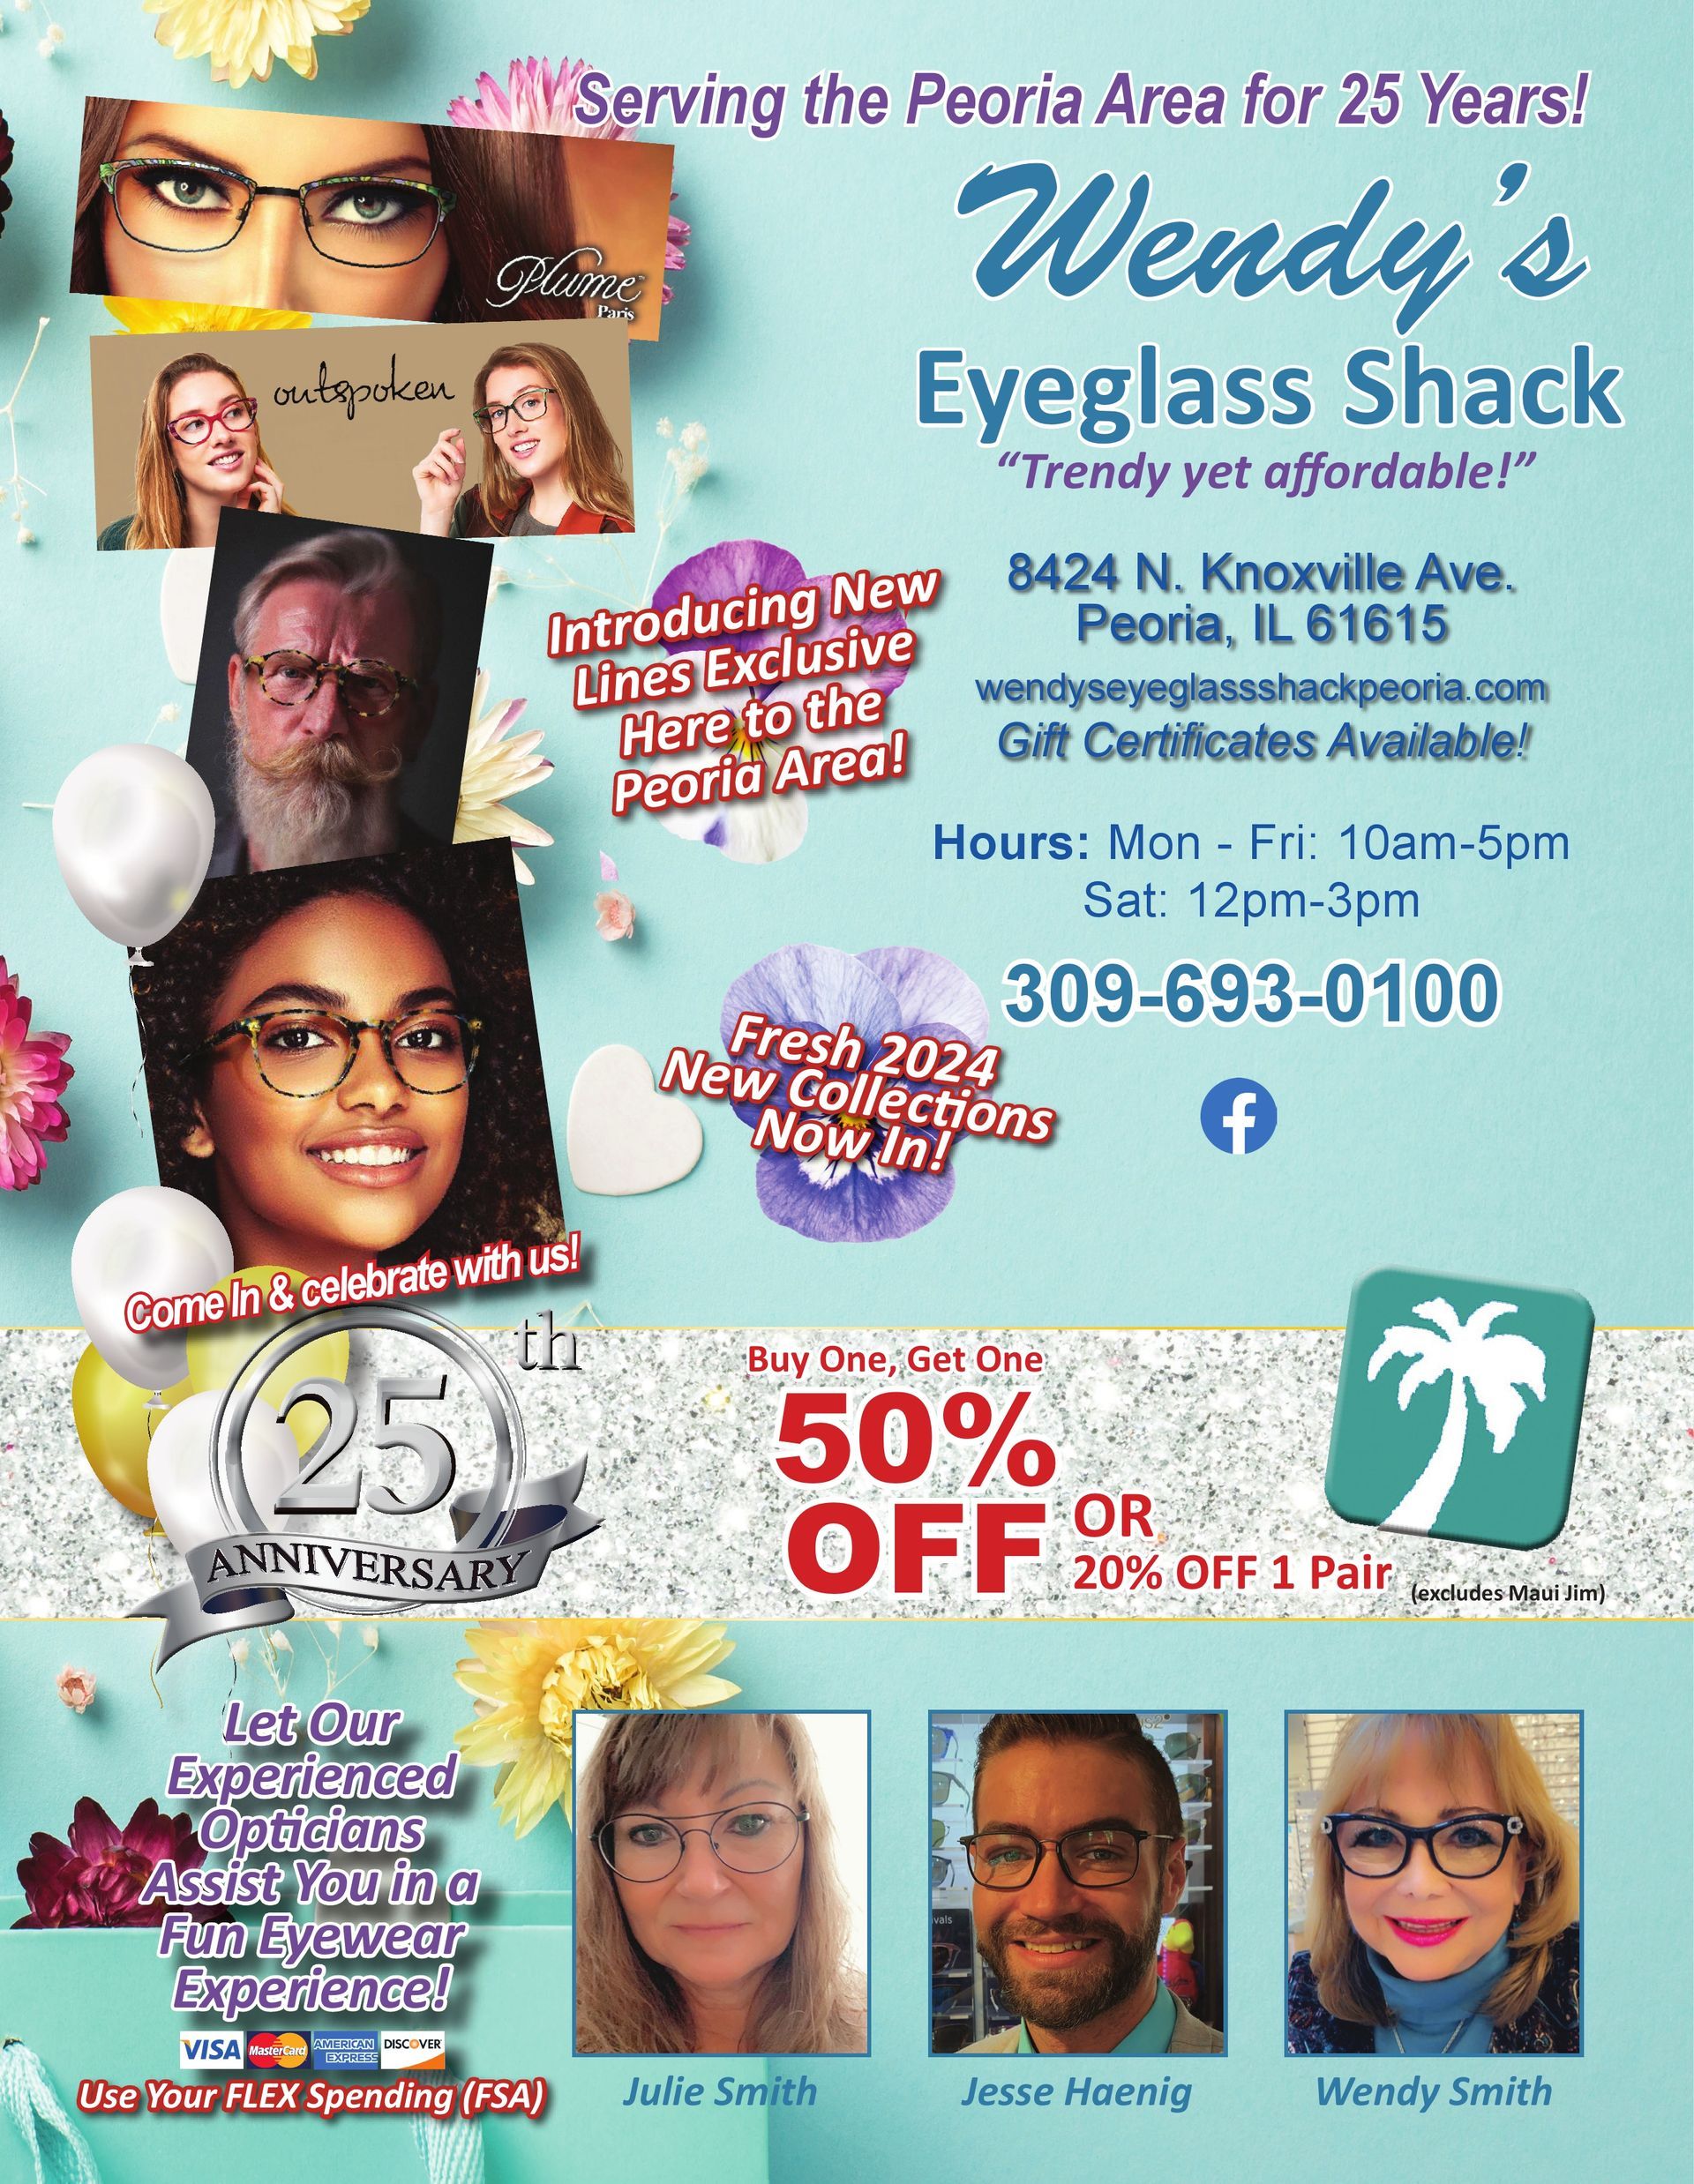 Wendy's Eyeglass Shack eyeglasses, sunglasses, repairs, adjustments, service. BOGO 50% off or 20% off coupon on eyeglasses. Peoria, IL